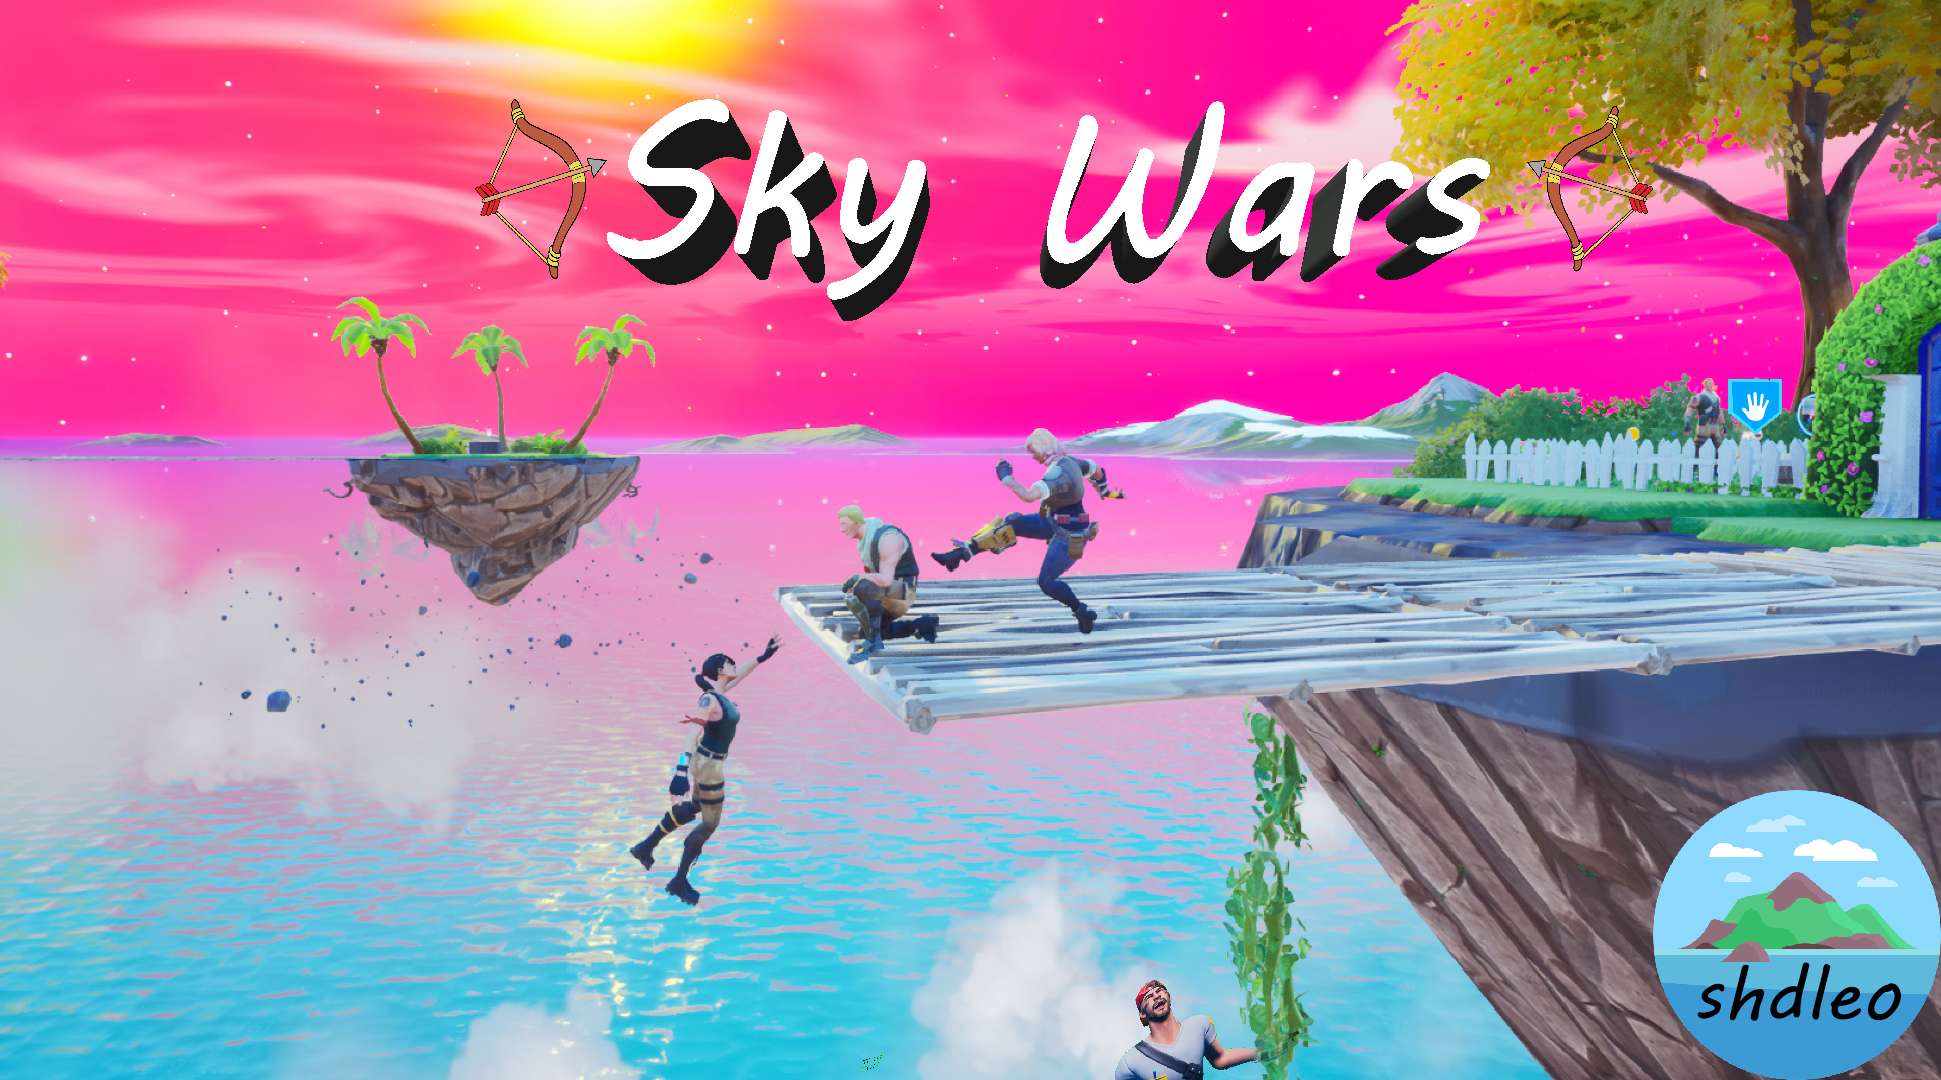 SKY WARS - THE ORIGINAL GAME